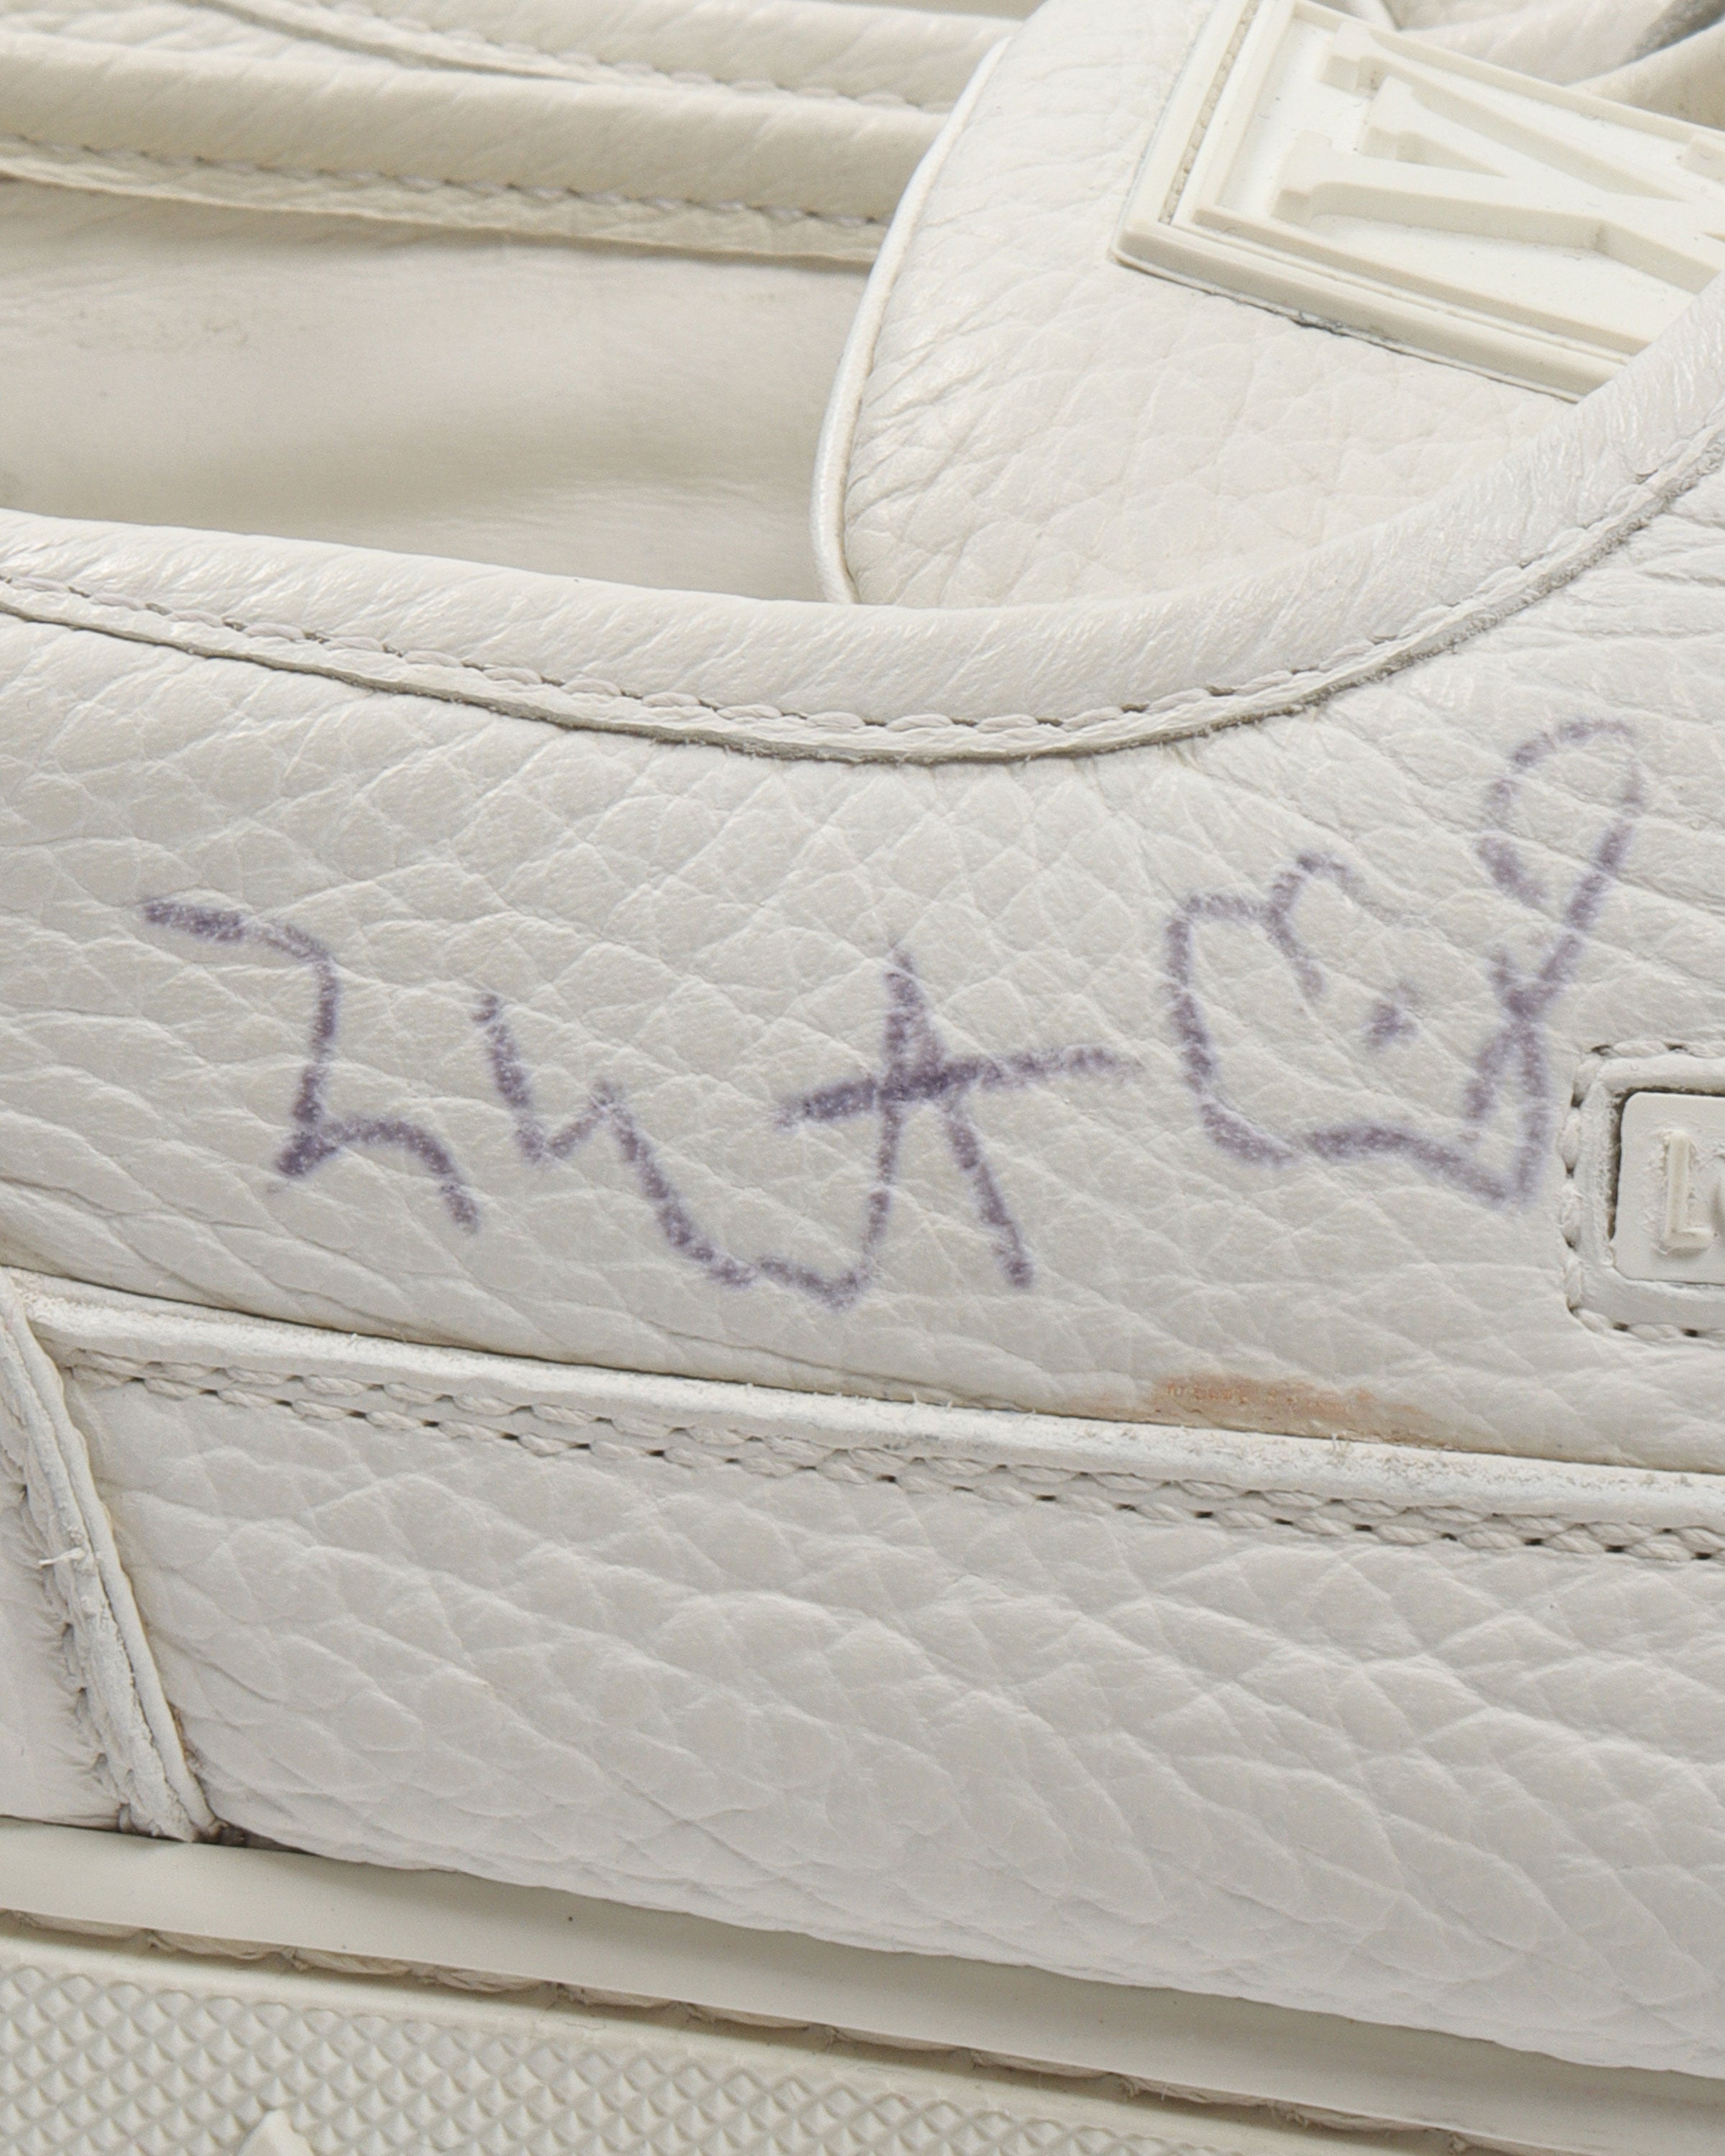 Kanye West Signs Louis Vuitton Patchwork Hudsons - Sneaker Bar Detroit